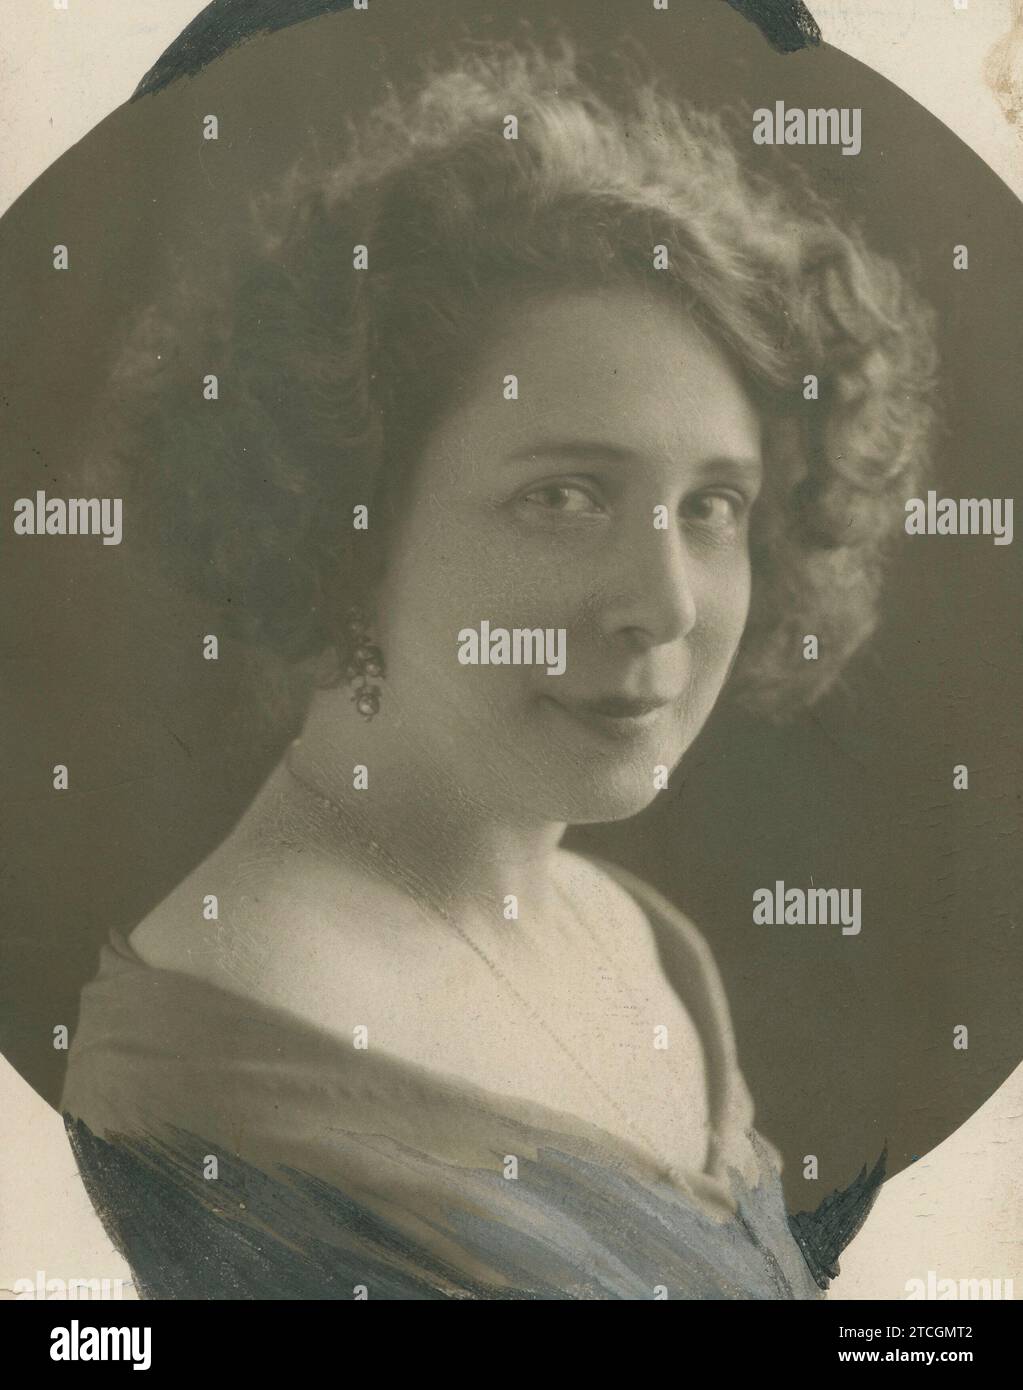 12/31/1929. Portrait of Margarita Nelken. Credit: Album / Archivo ABC Stock Photo